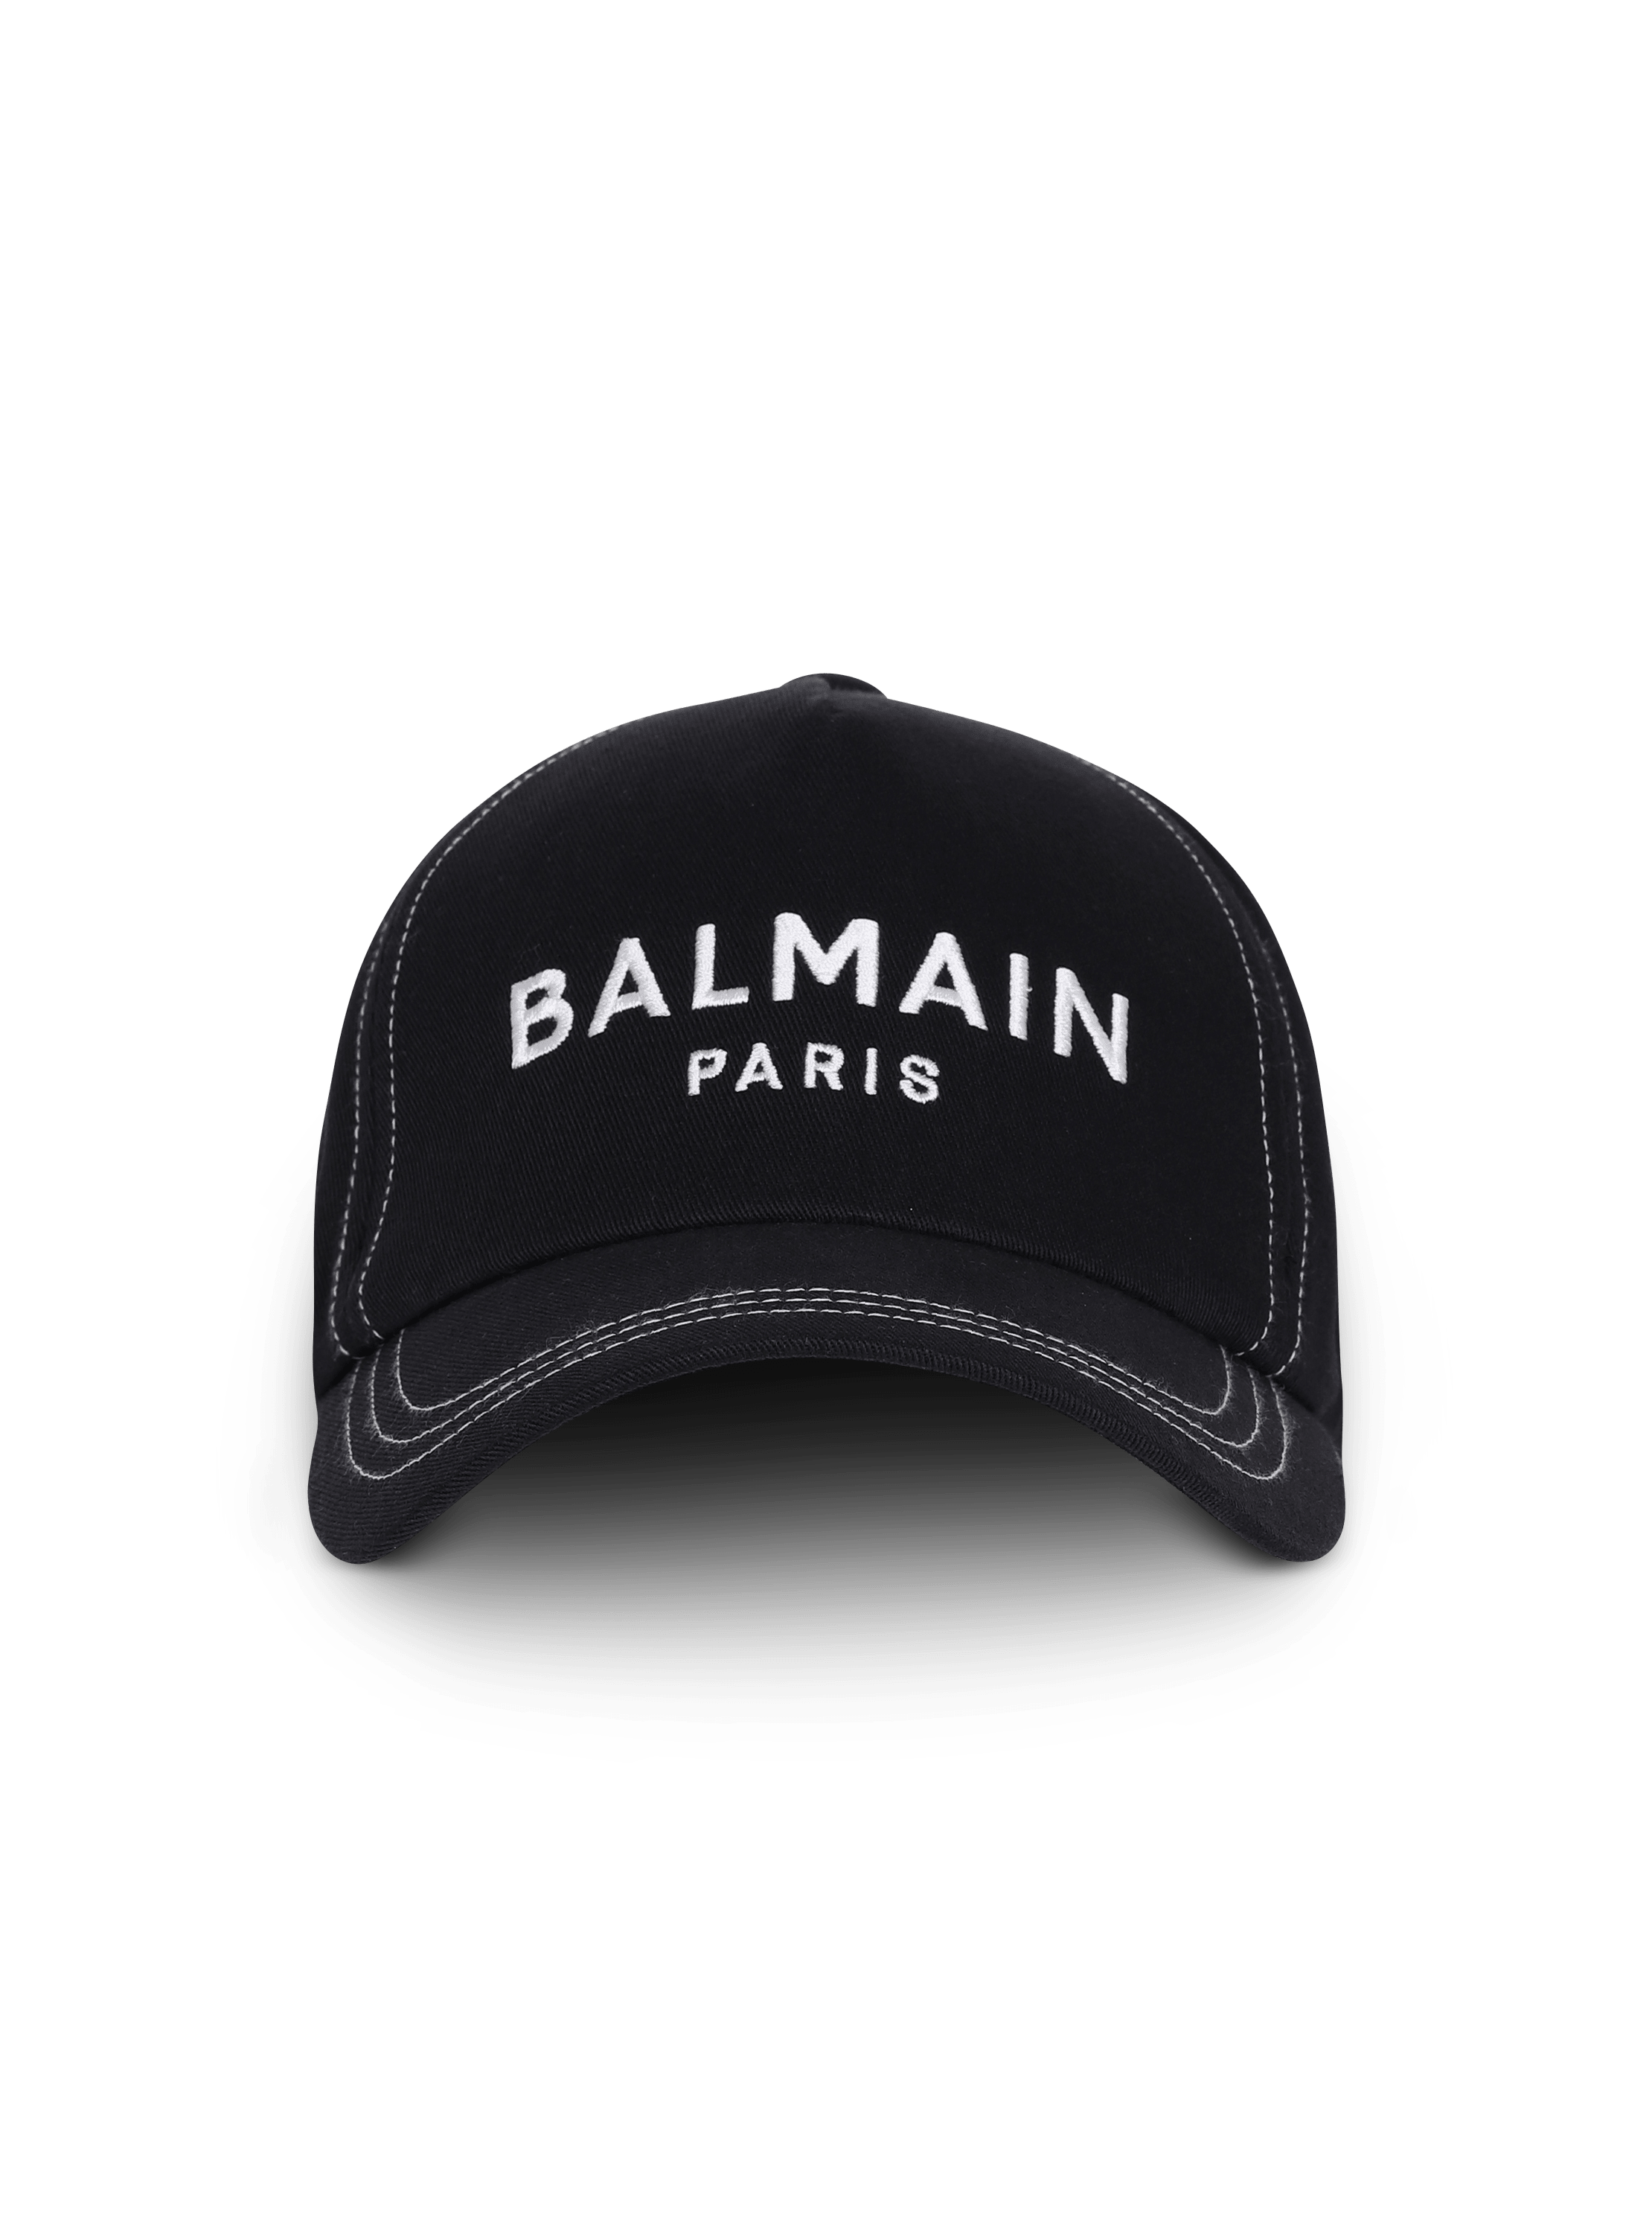 Embroidered Balmain Paris cap navy - Men | BALMAIN